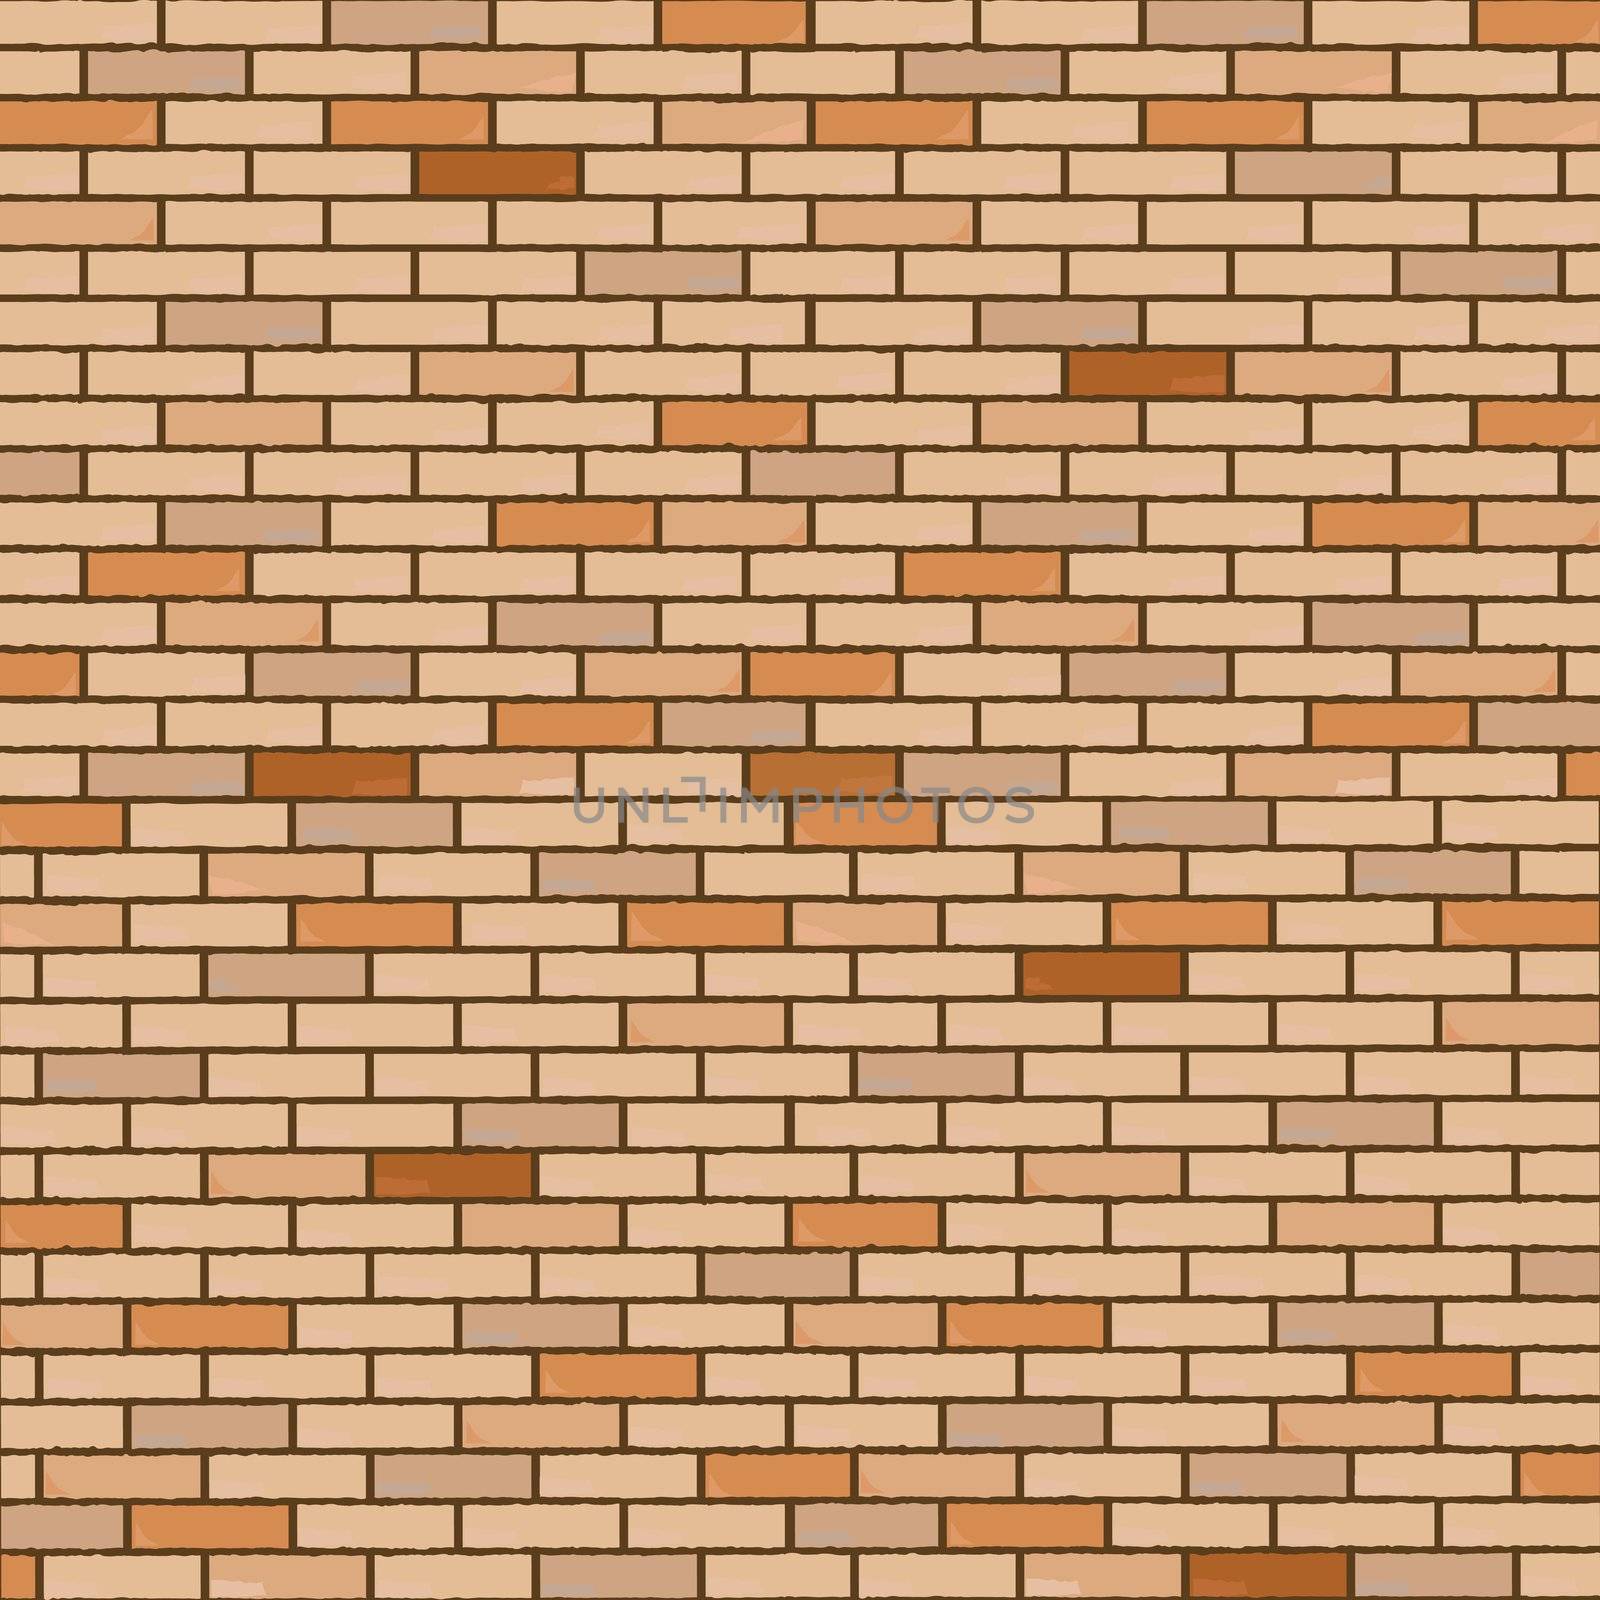 wall made of bricks by robertosch